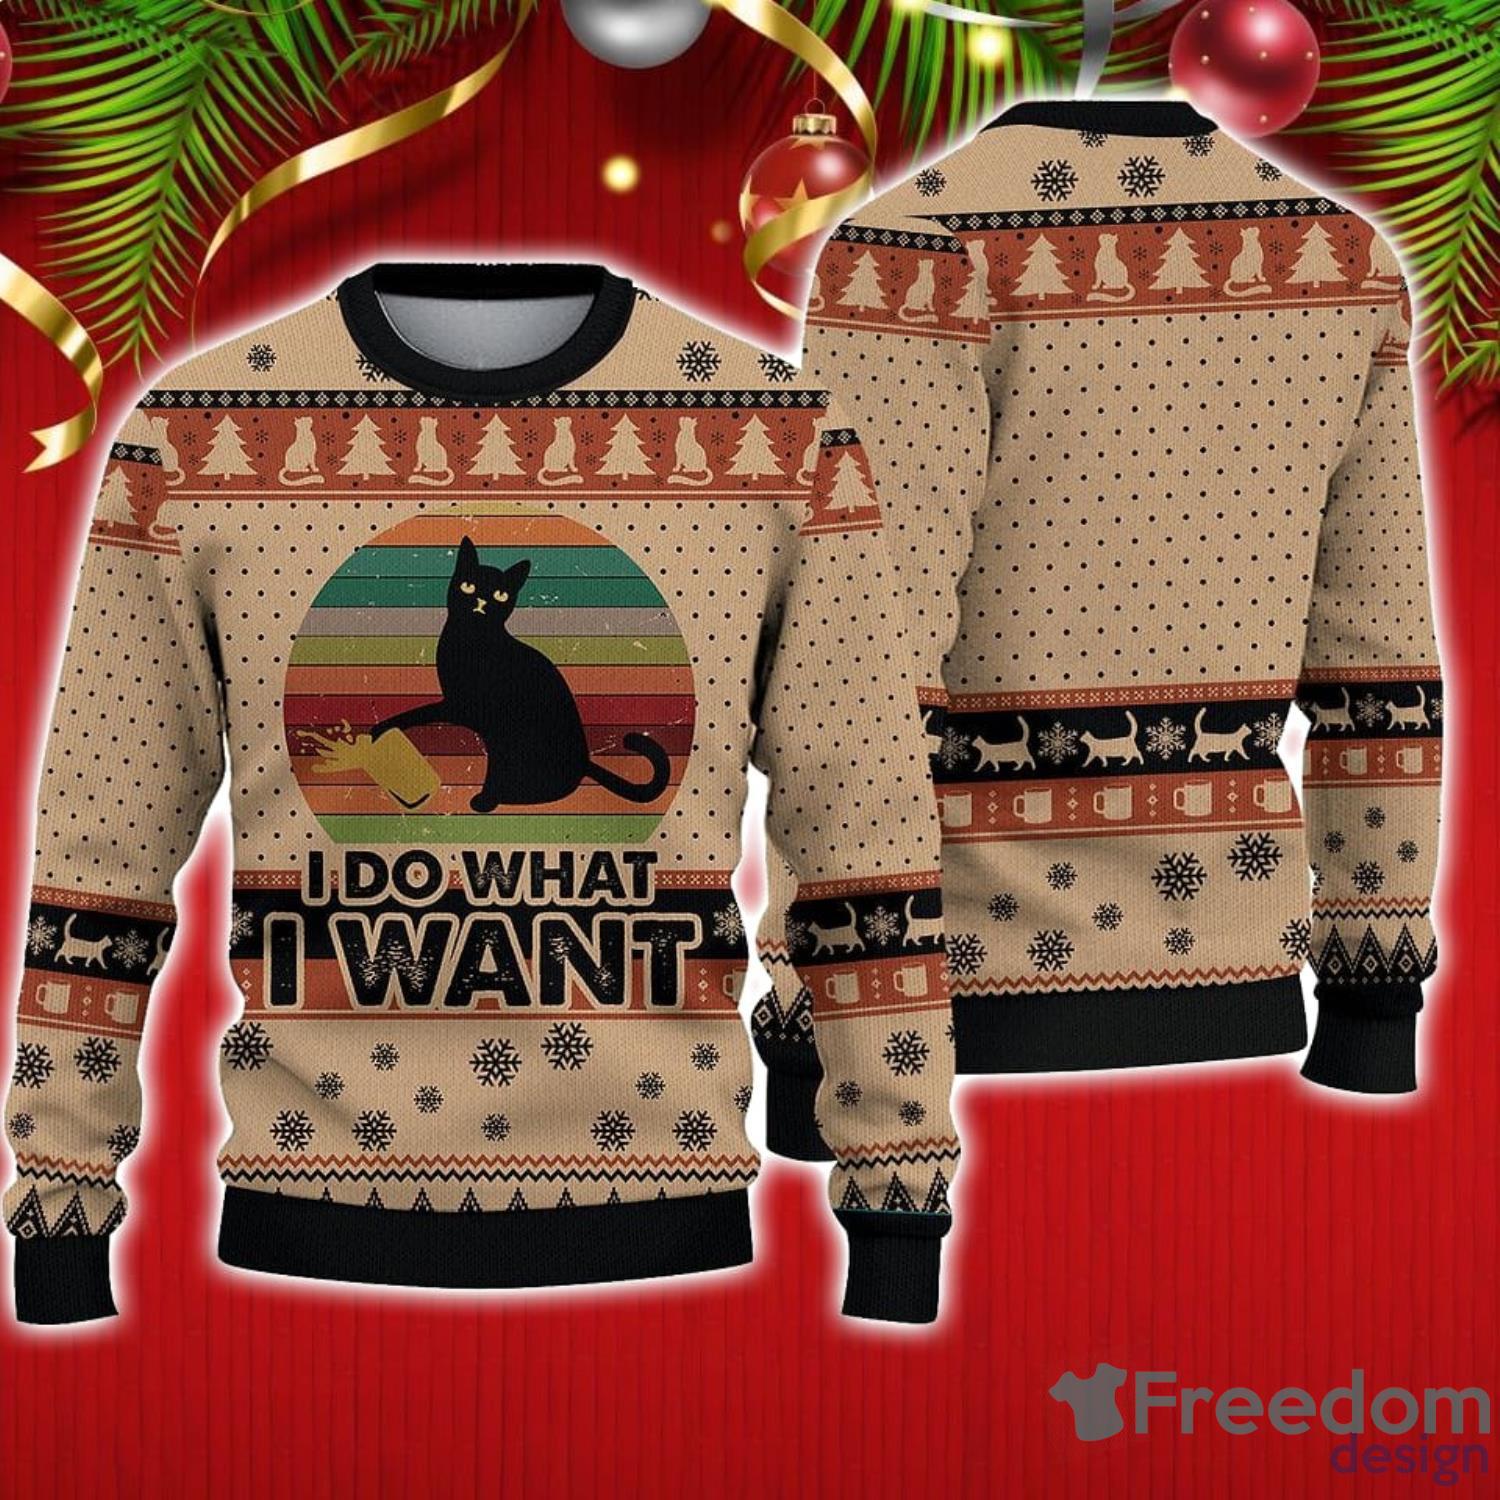 It's officially Christmas sweater season #goldenretrieverlife #dog